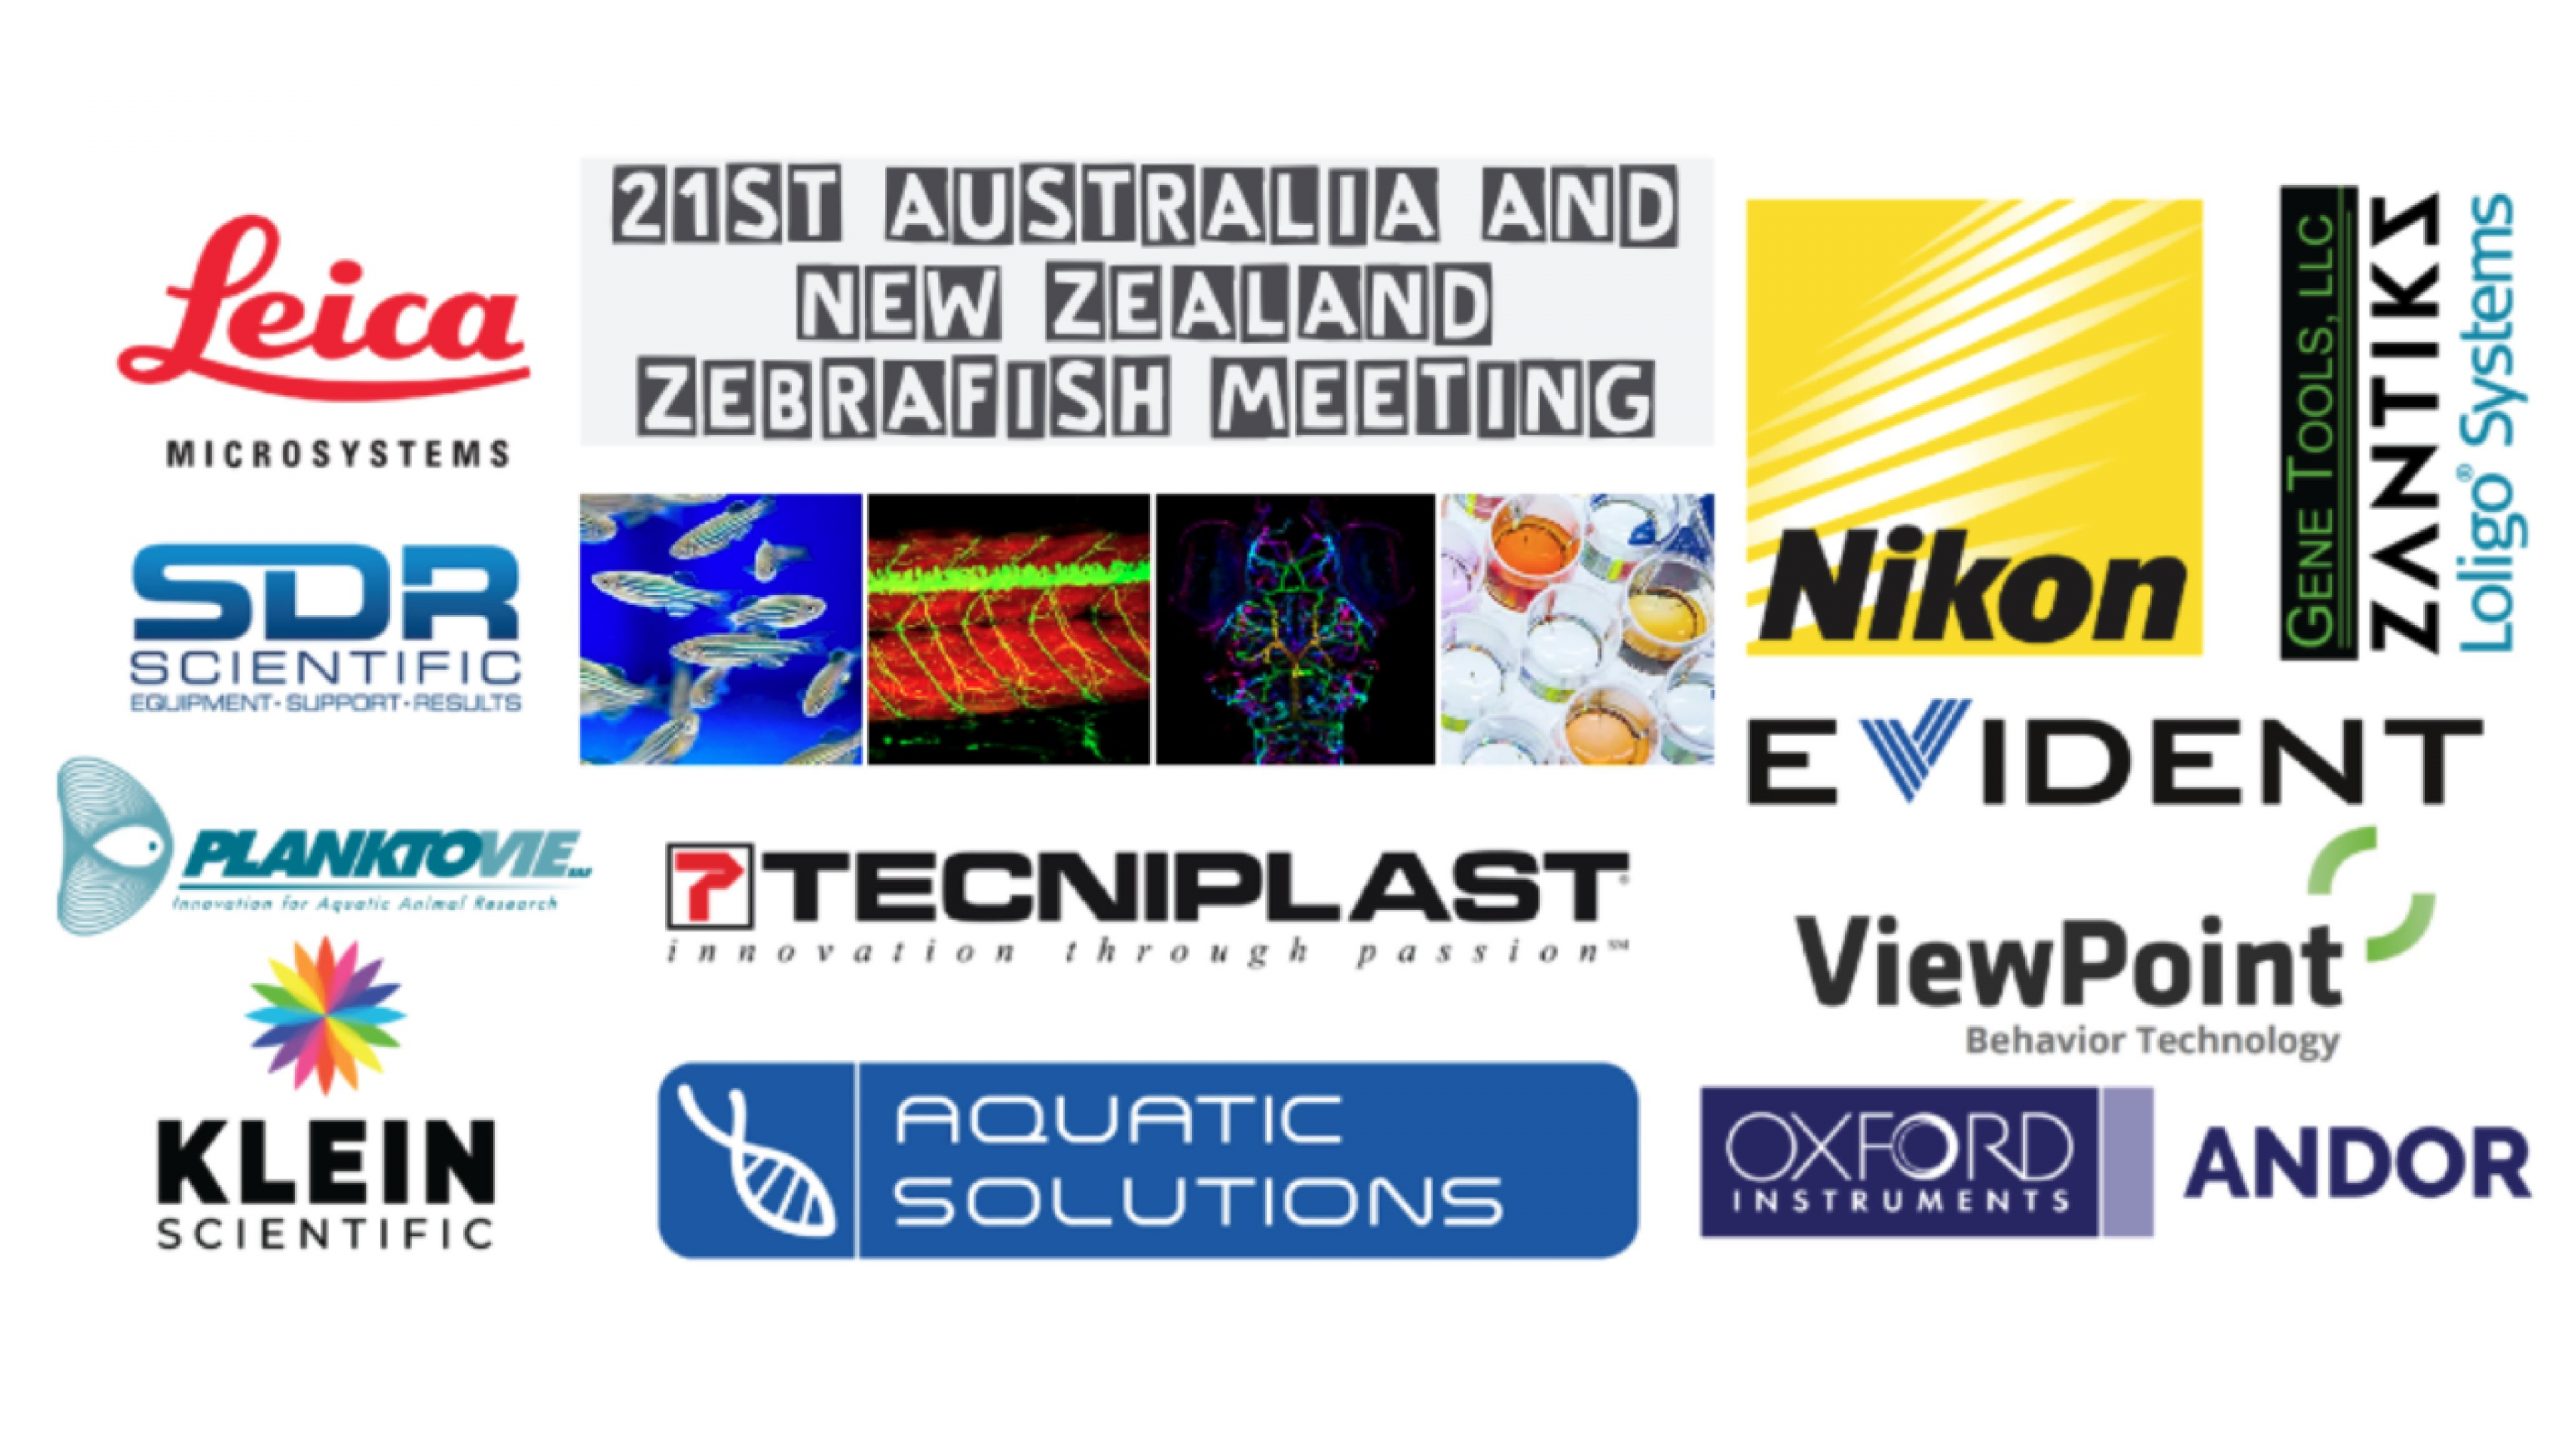 21st Australia and New Zealand Zebrafish Meeting Planktovie